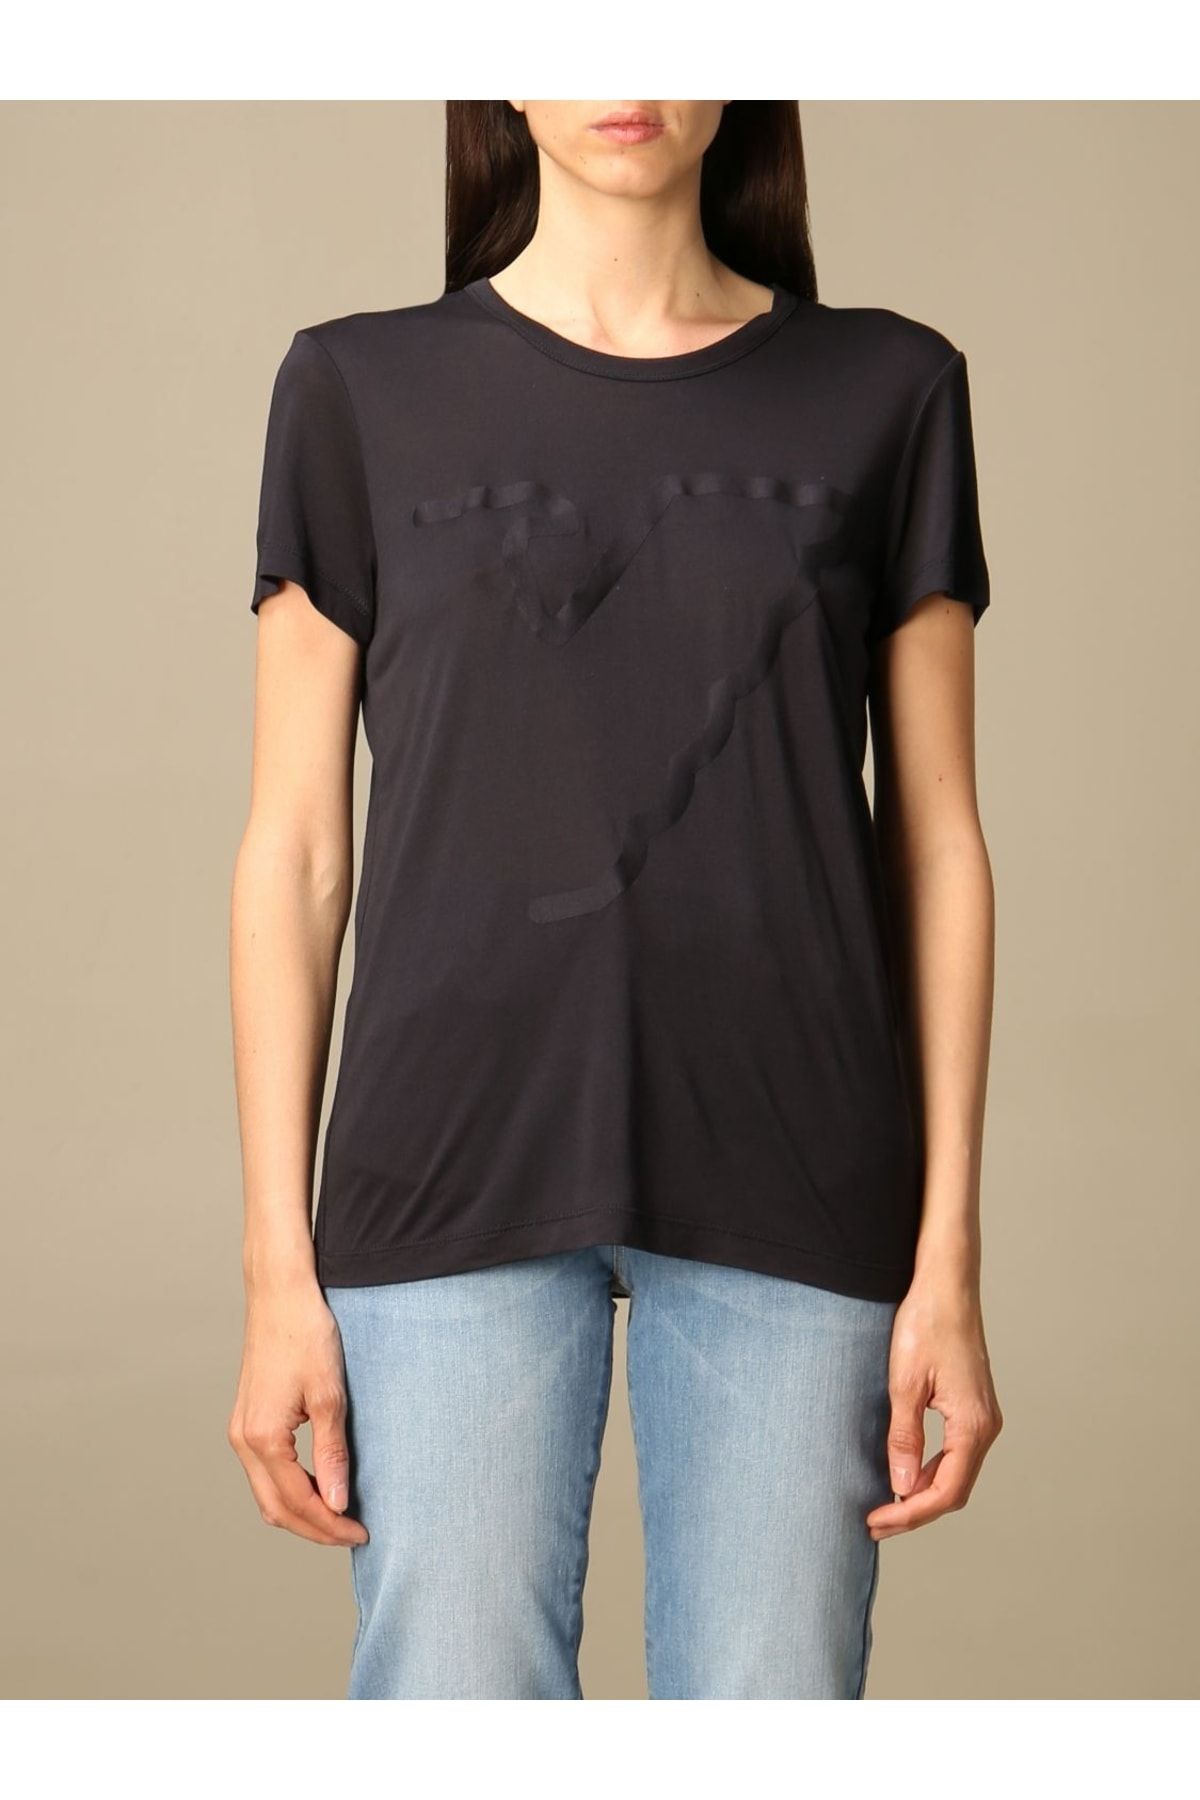 Emporio Armani Kadın Marka Logolu Organik Pamuklu Kısa Kollu Lacivert T-shirt 3k2t7f 2jraz-lacivert